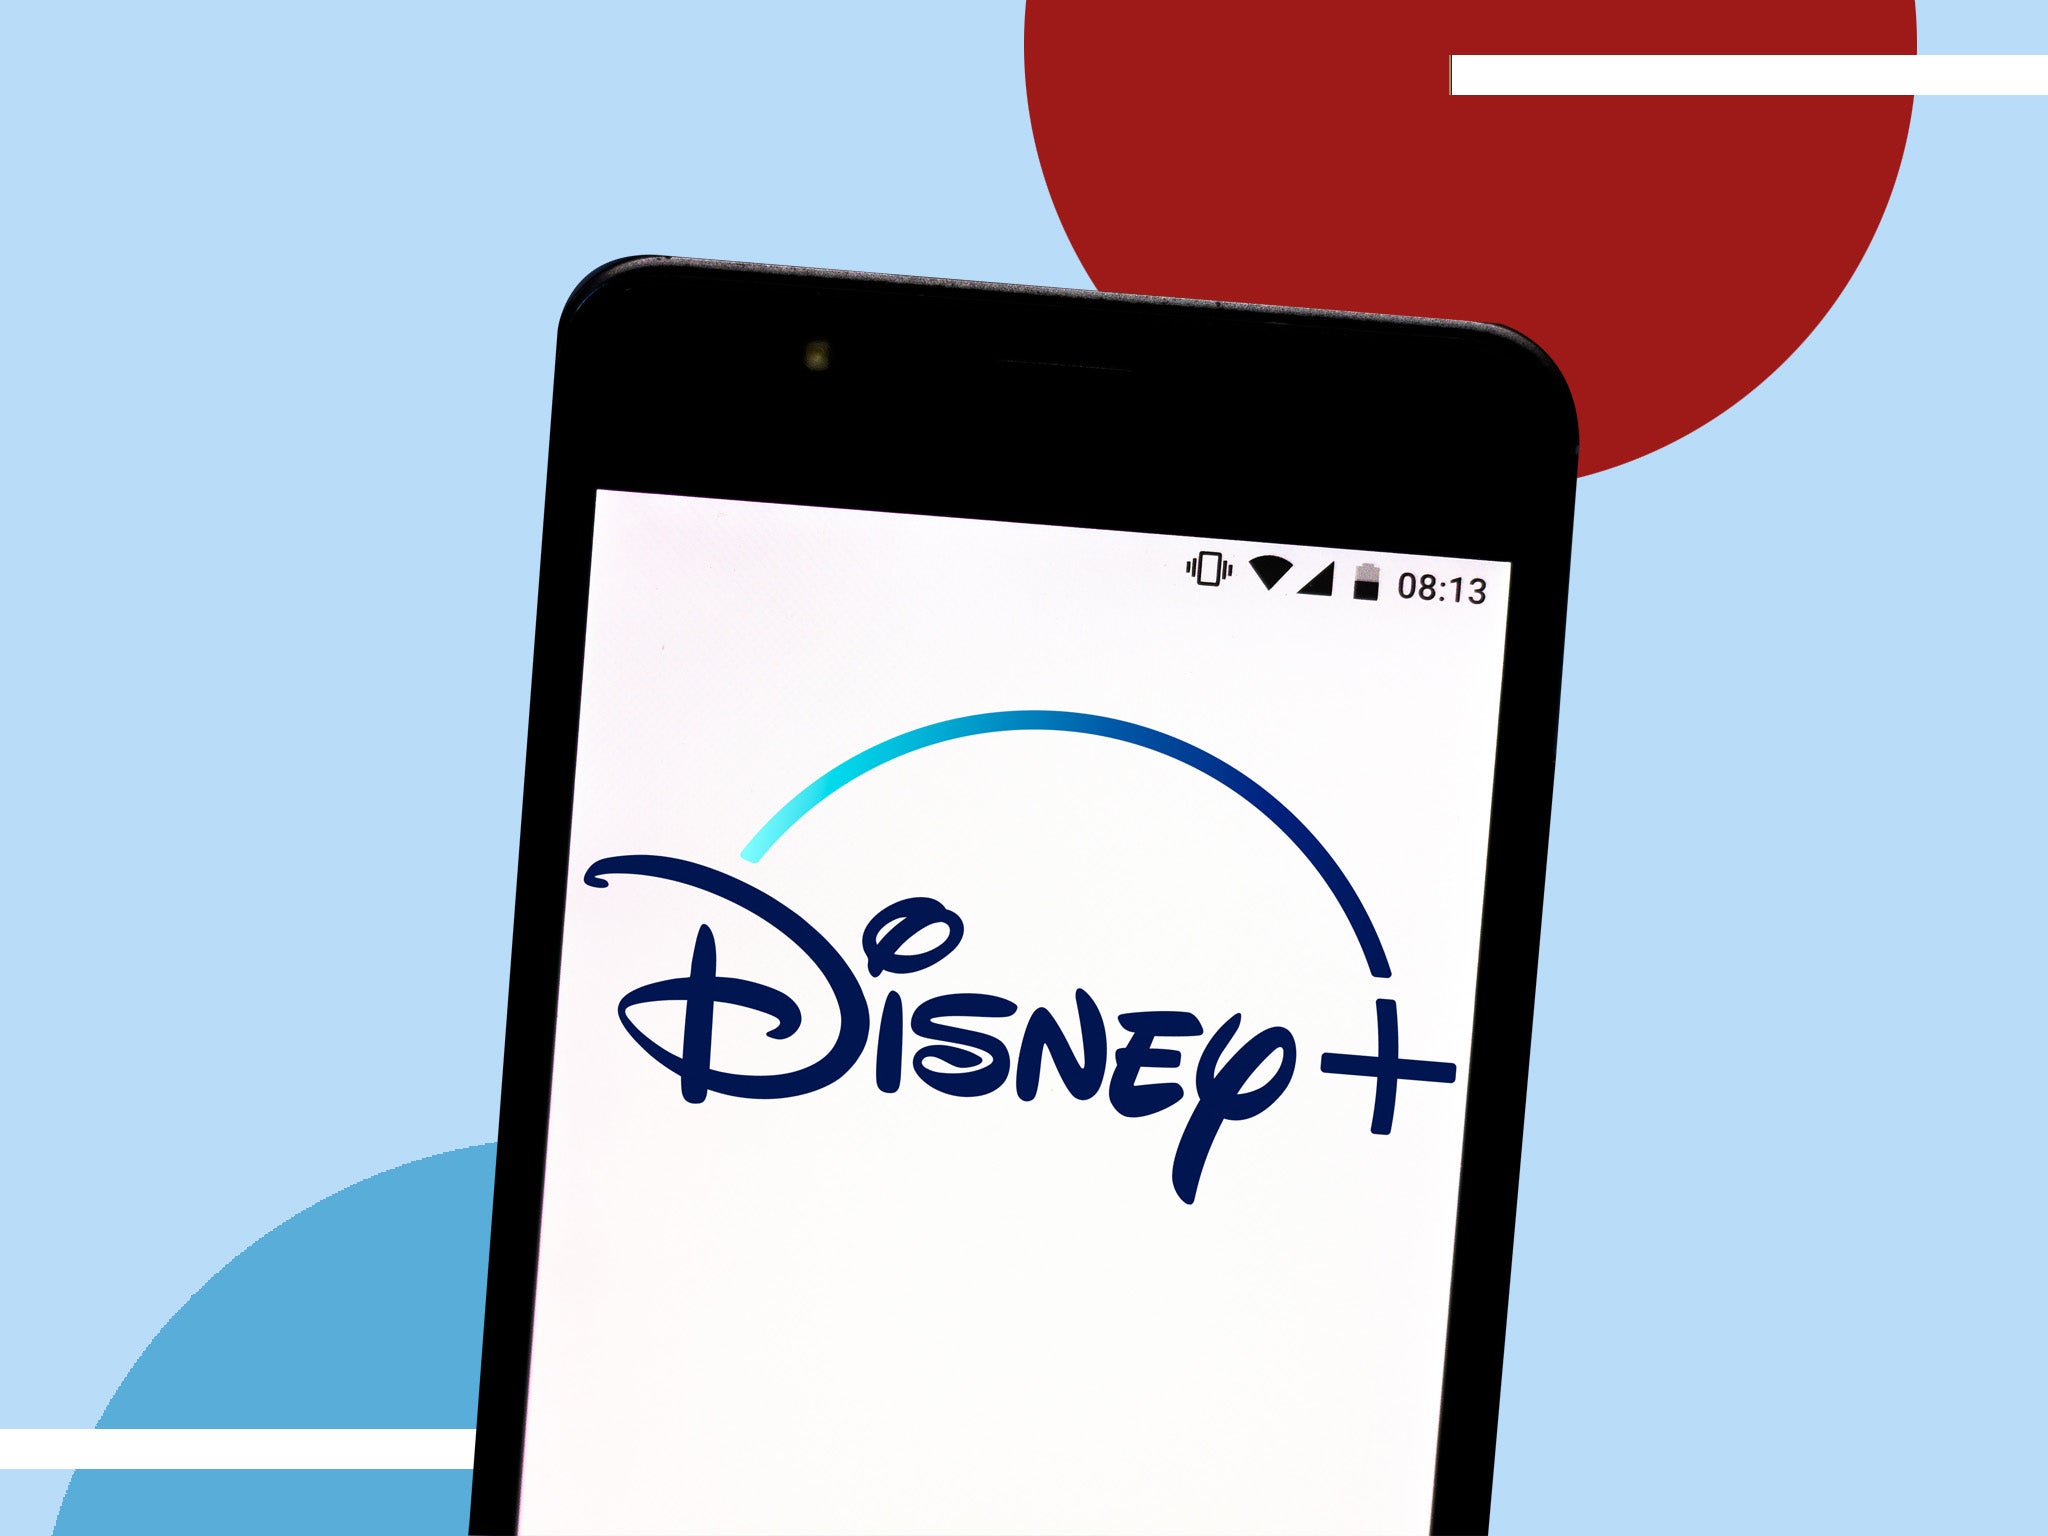 Disney+ on the App Store